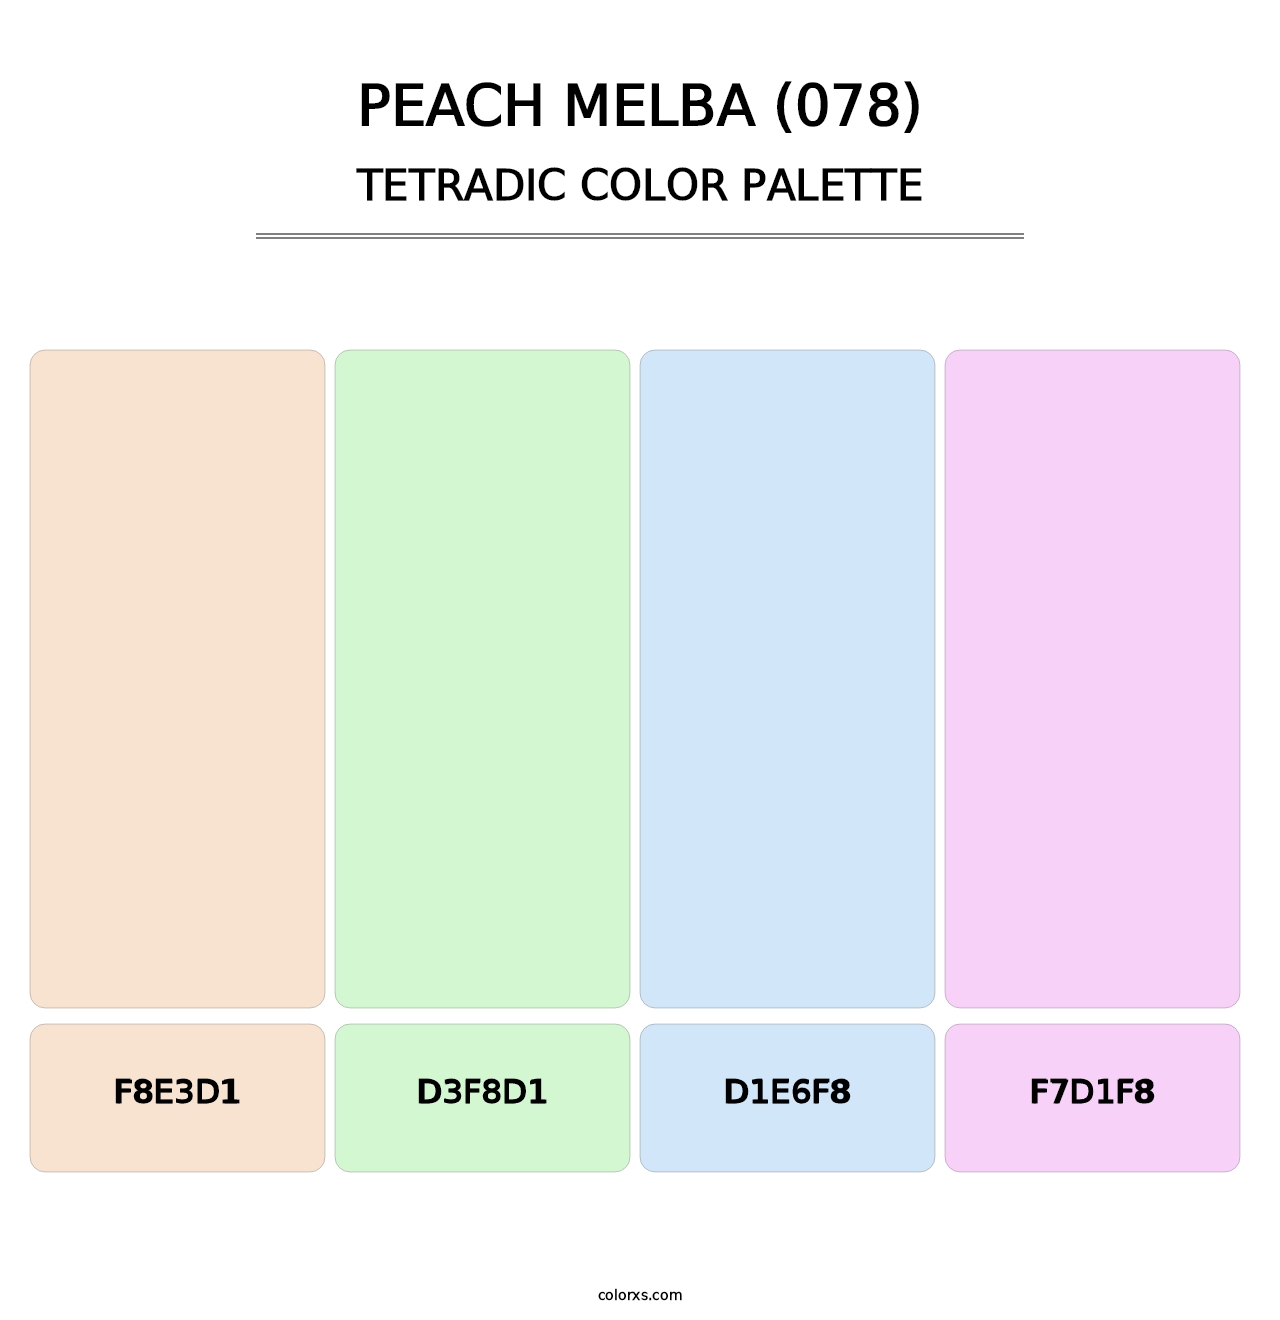 Peach Melba (078) - Tetradic Color Palette